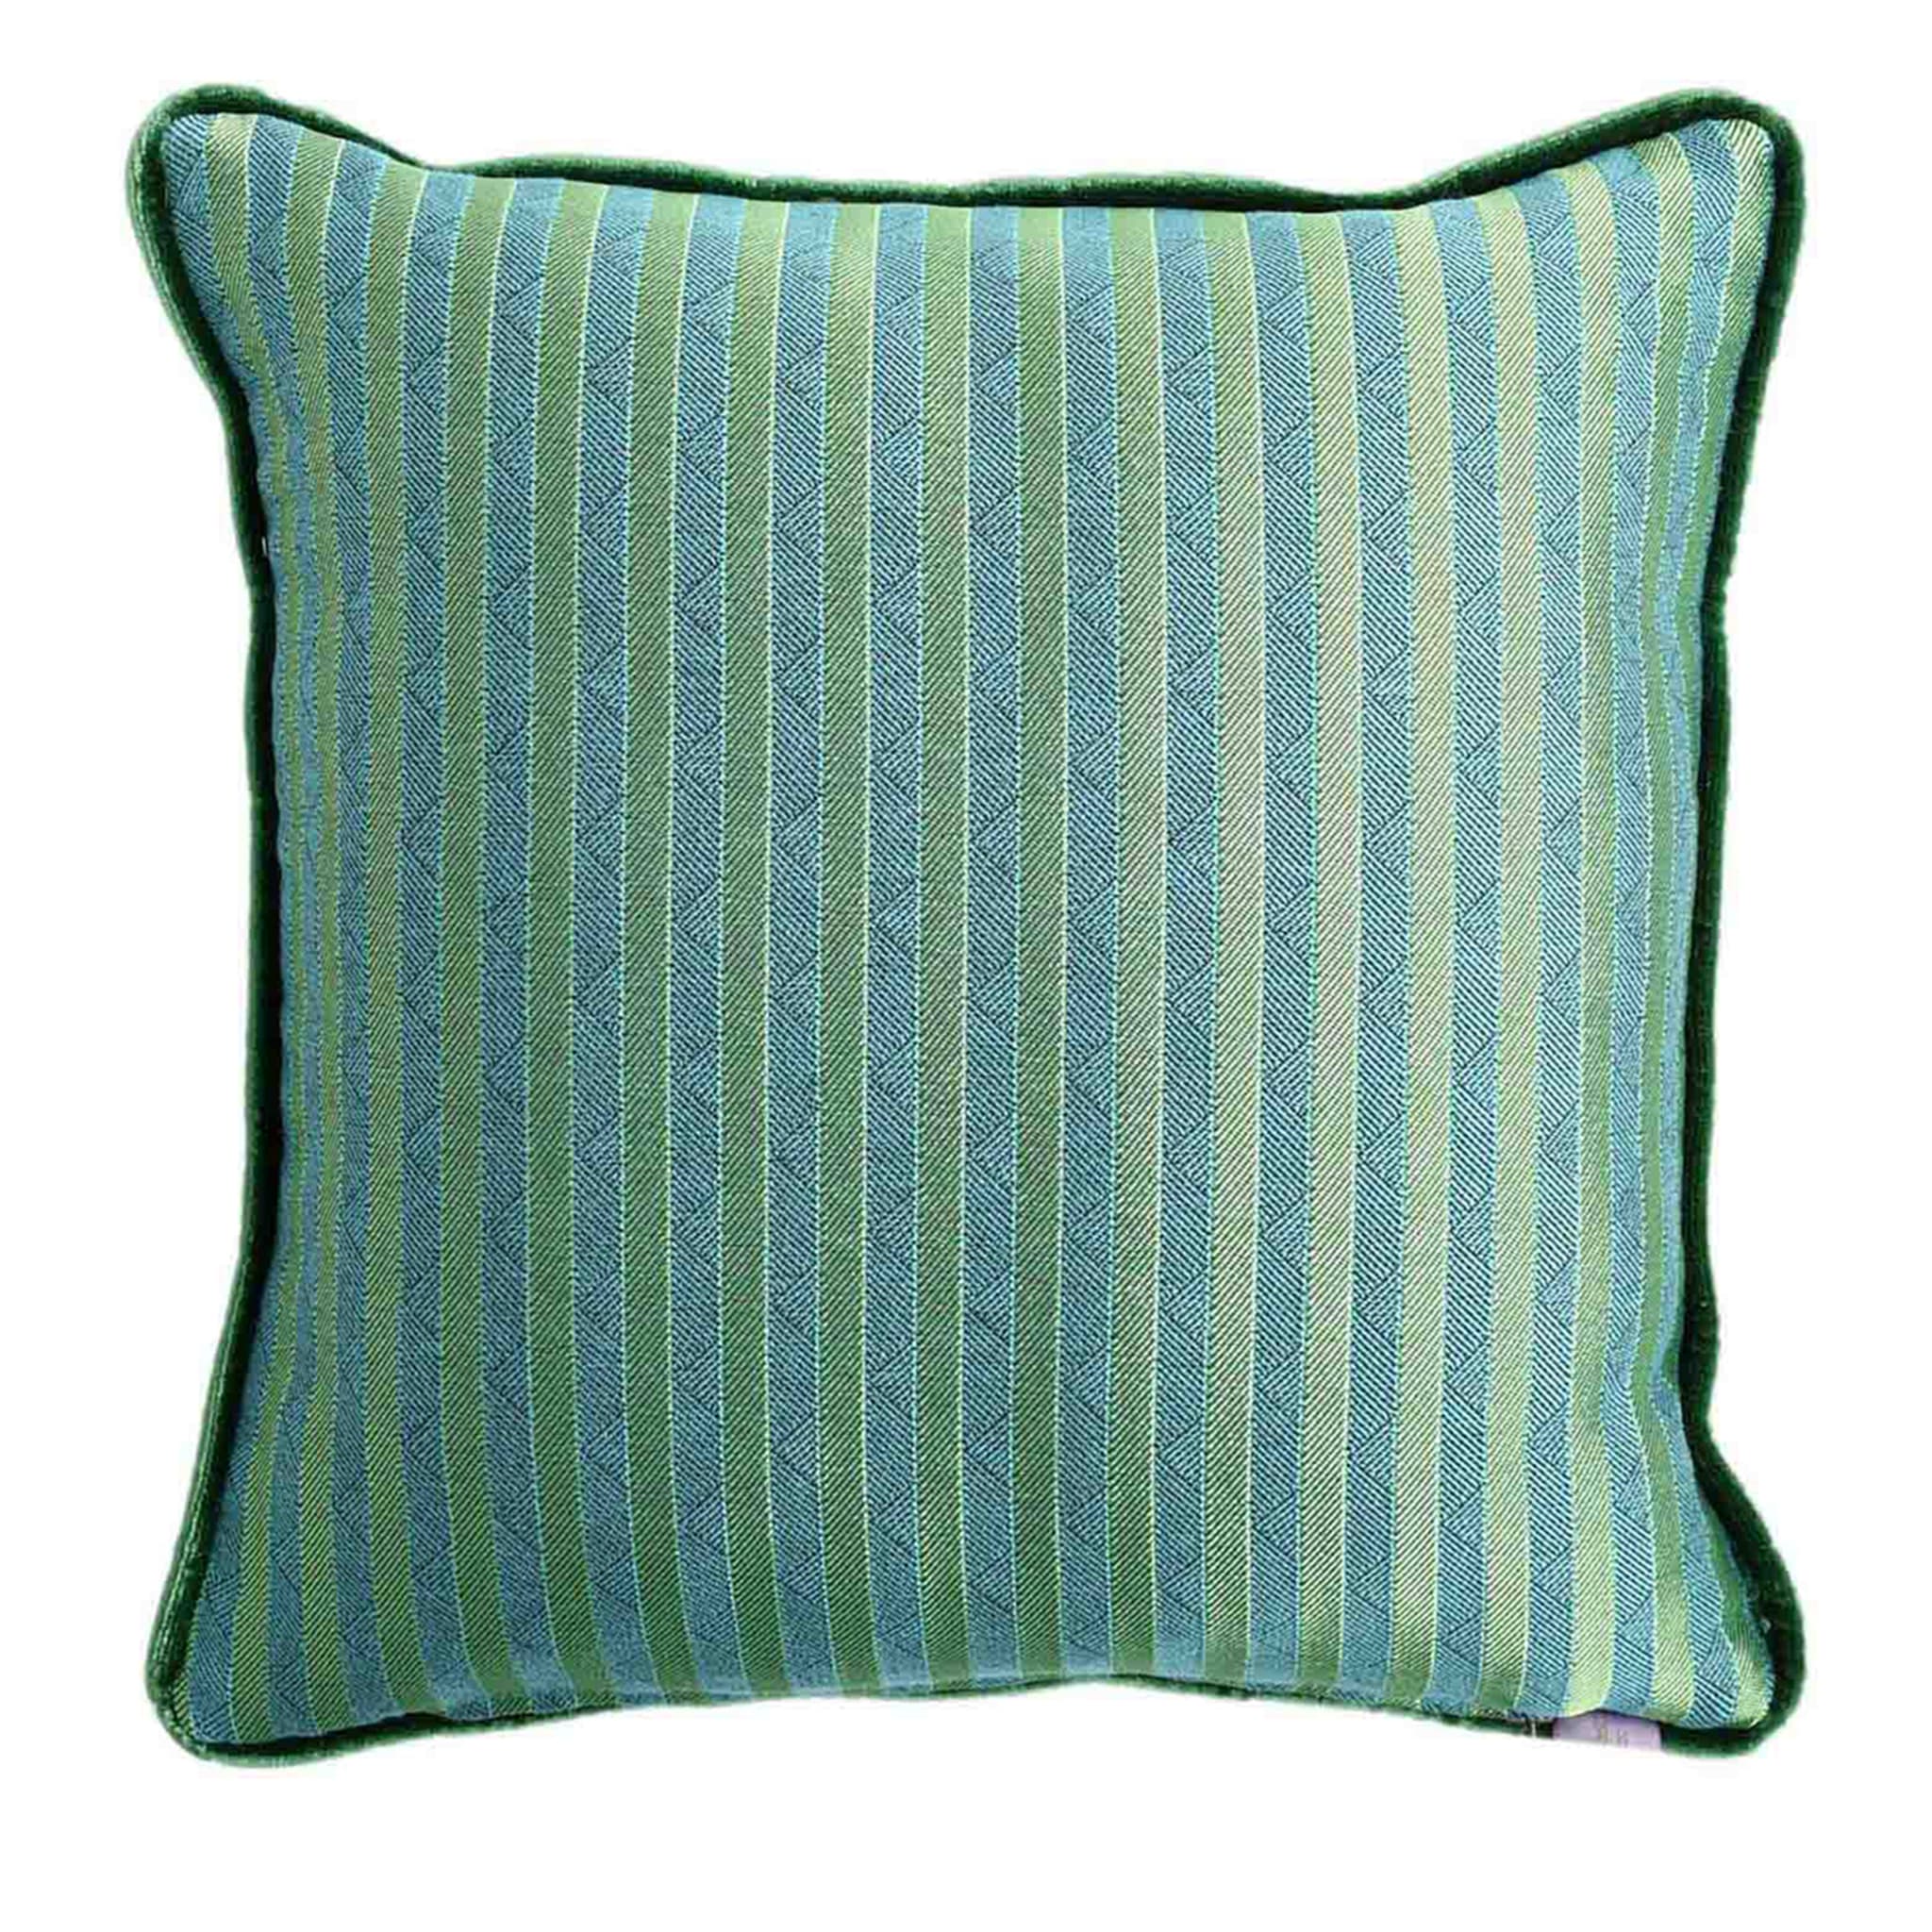 Green Carrè Cushion in striped jacquard fabric - Main view